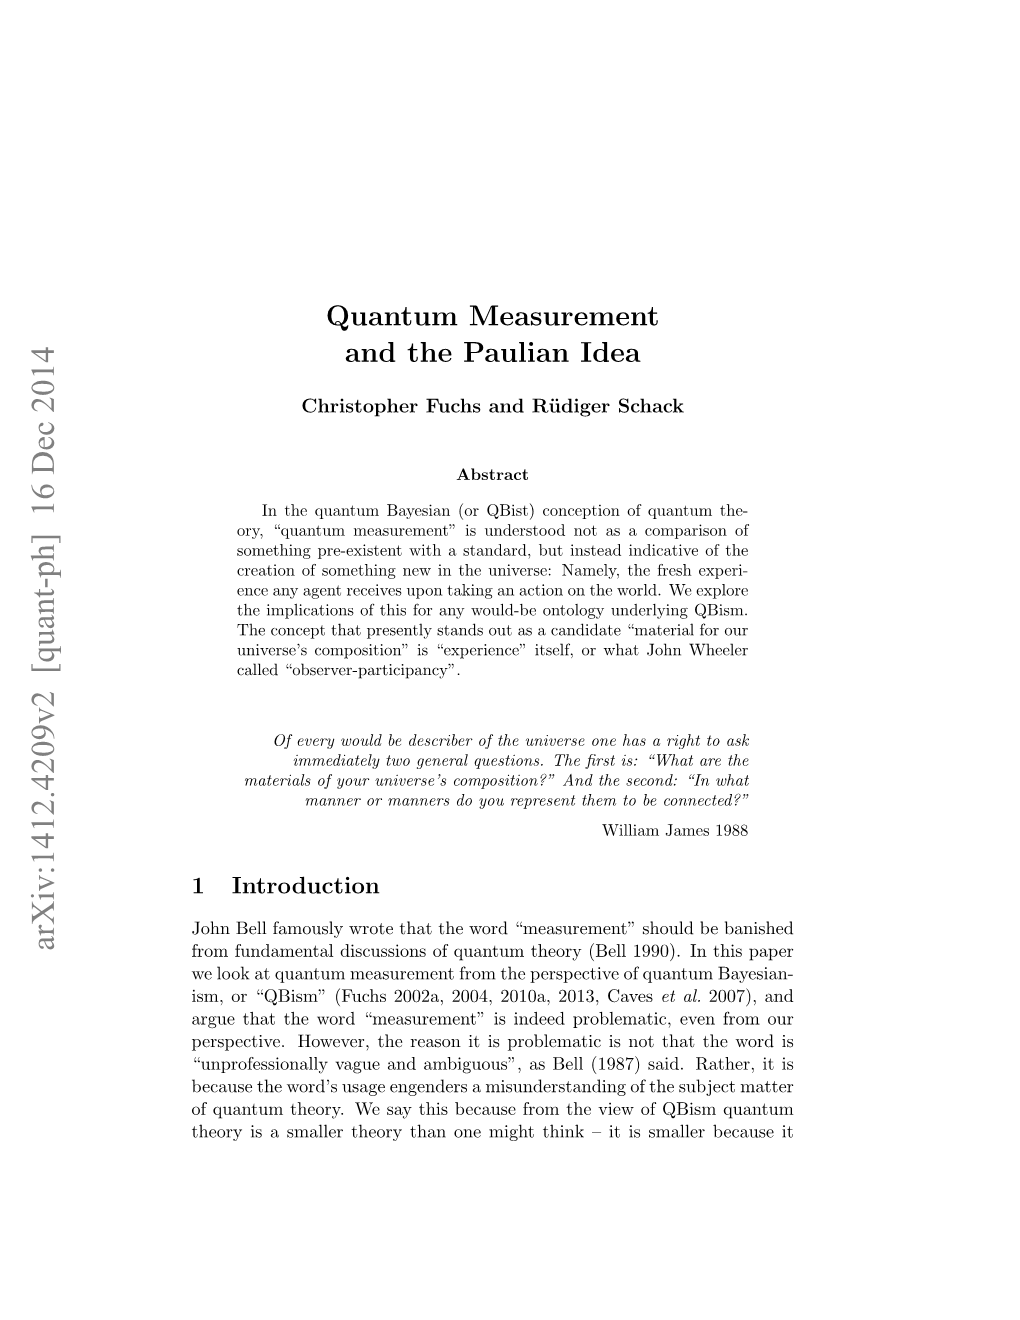 Quantum Measurement and the Paulian Idea